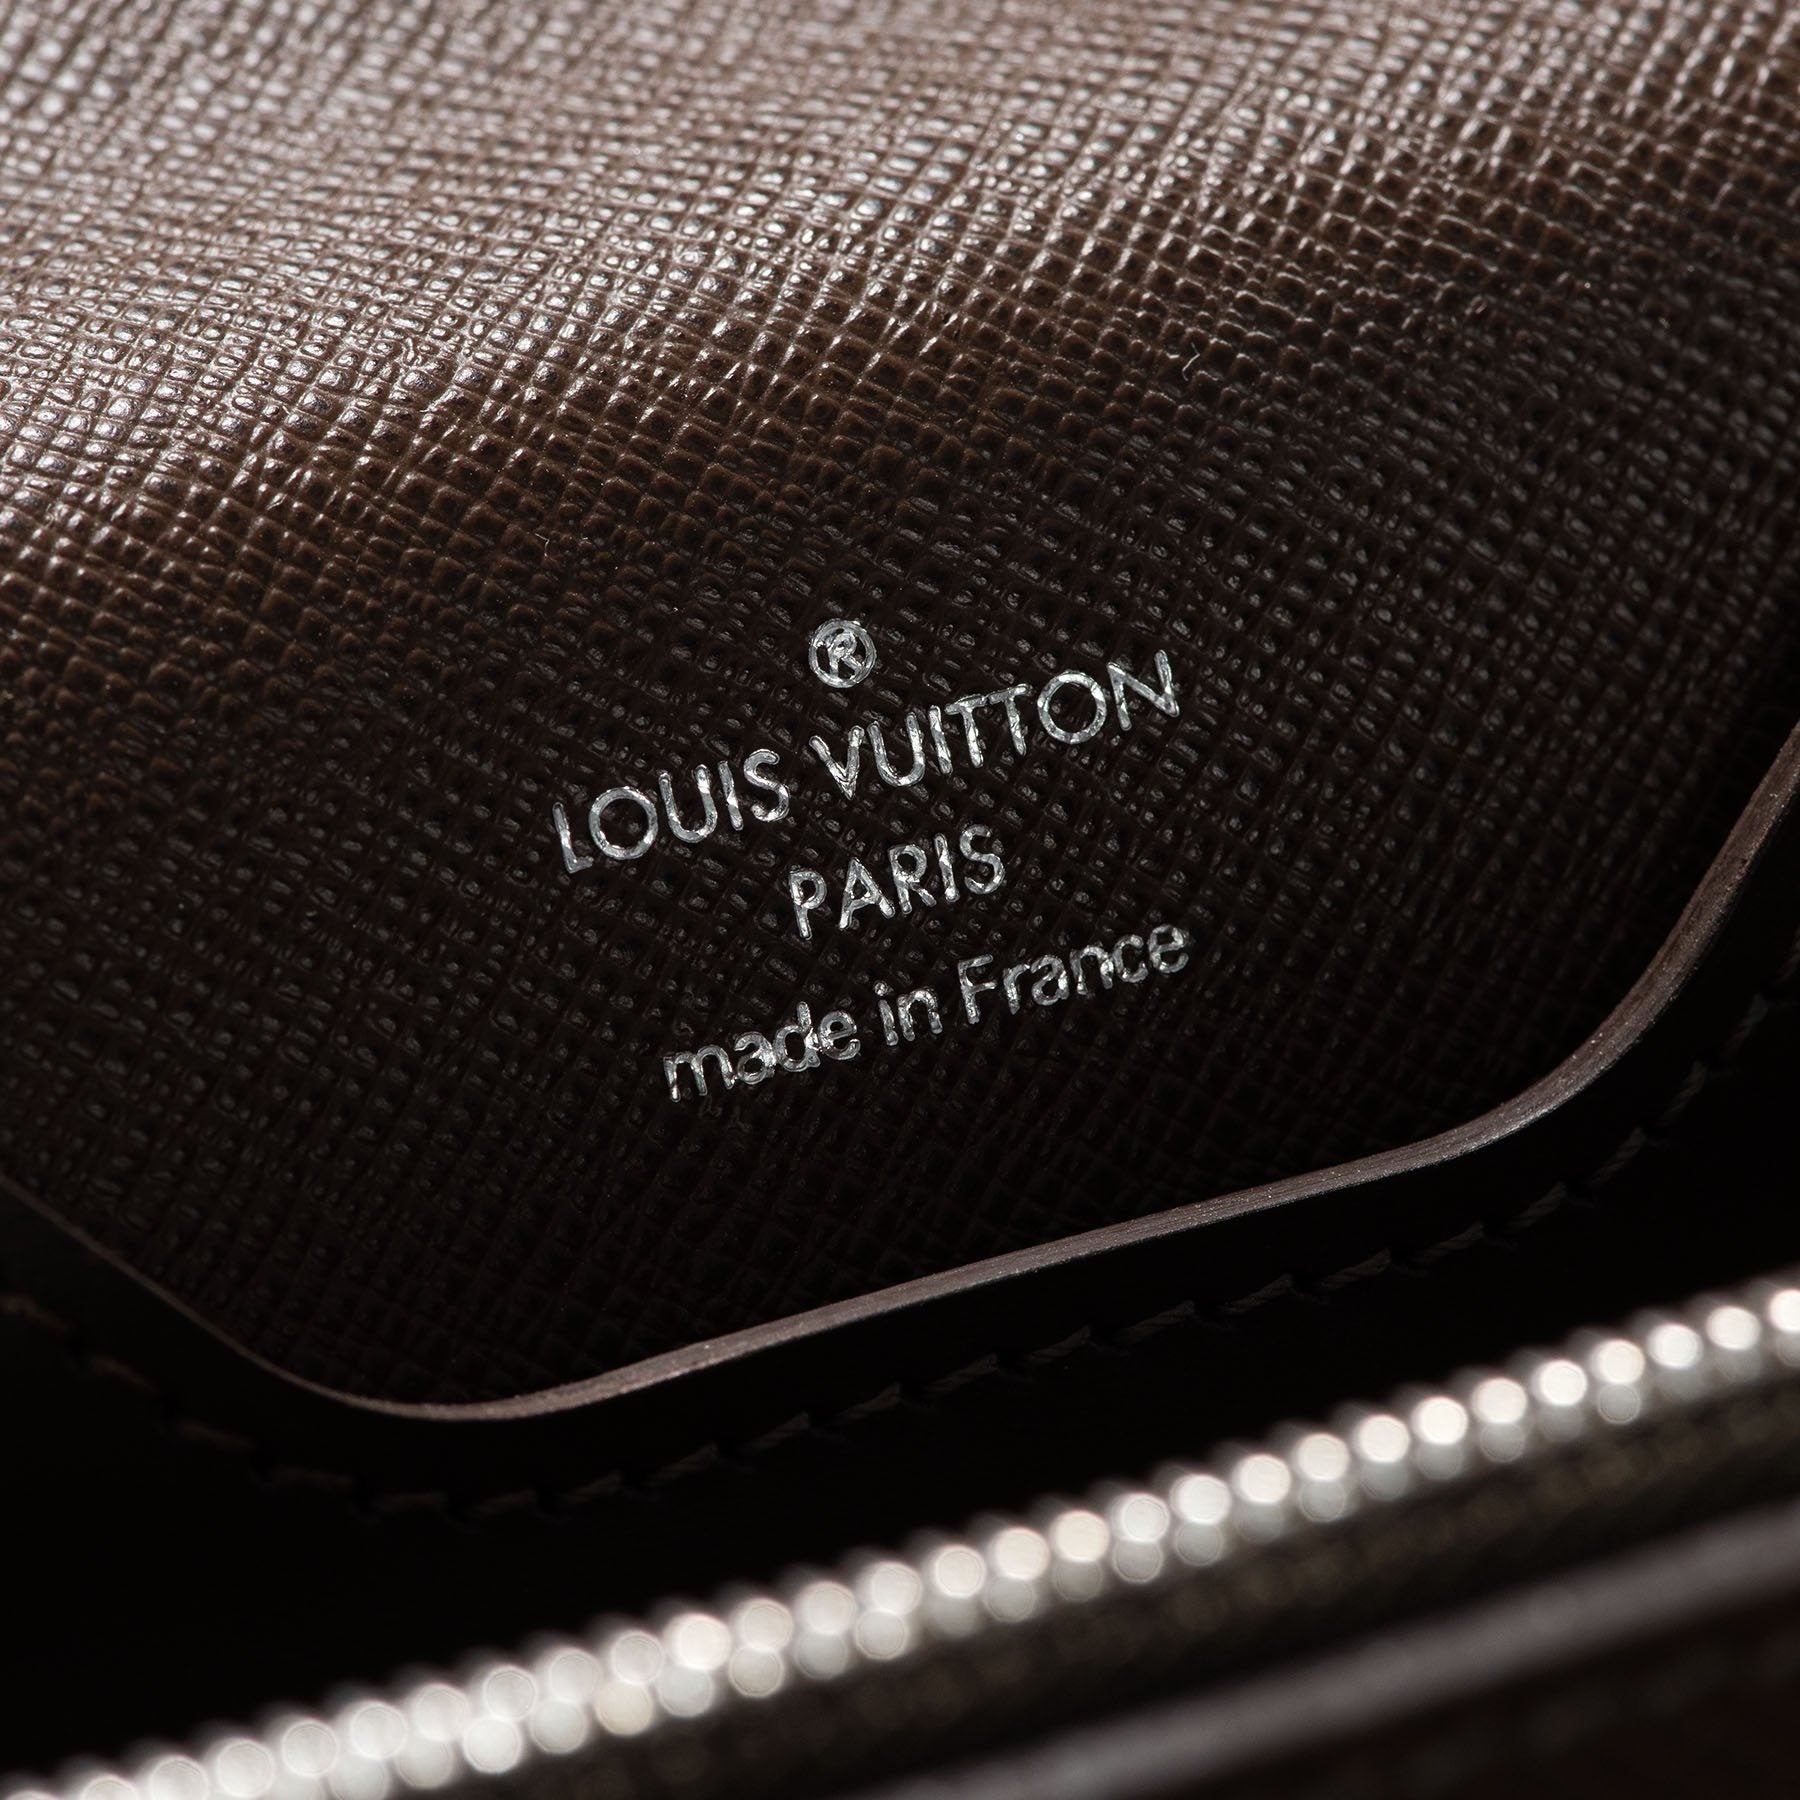 Louis Vuitton Brown Taiga Robusto Business Bag